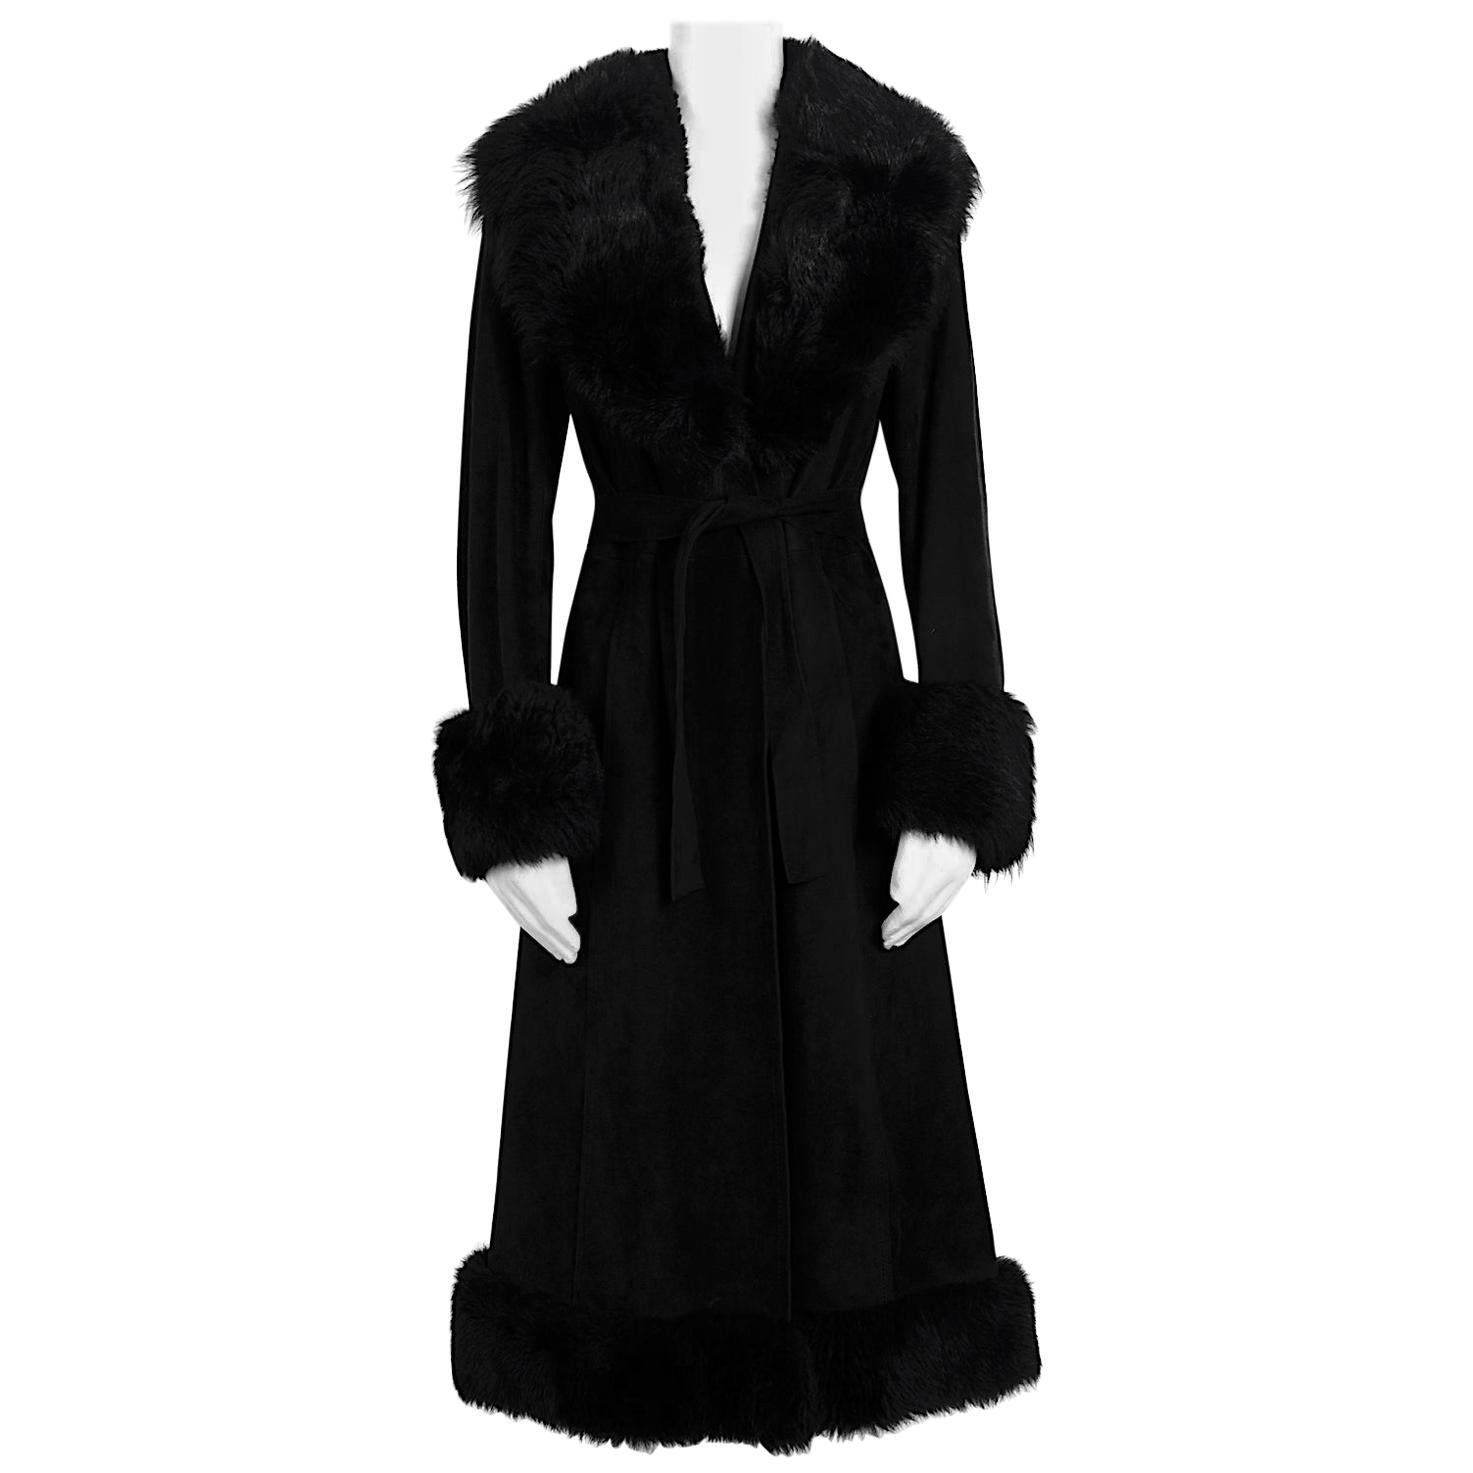 Lanvin vintage 1960s black suede belted coat with removable fur collar